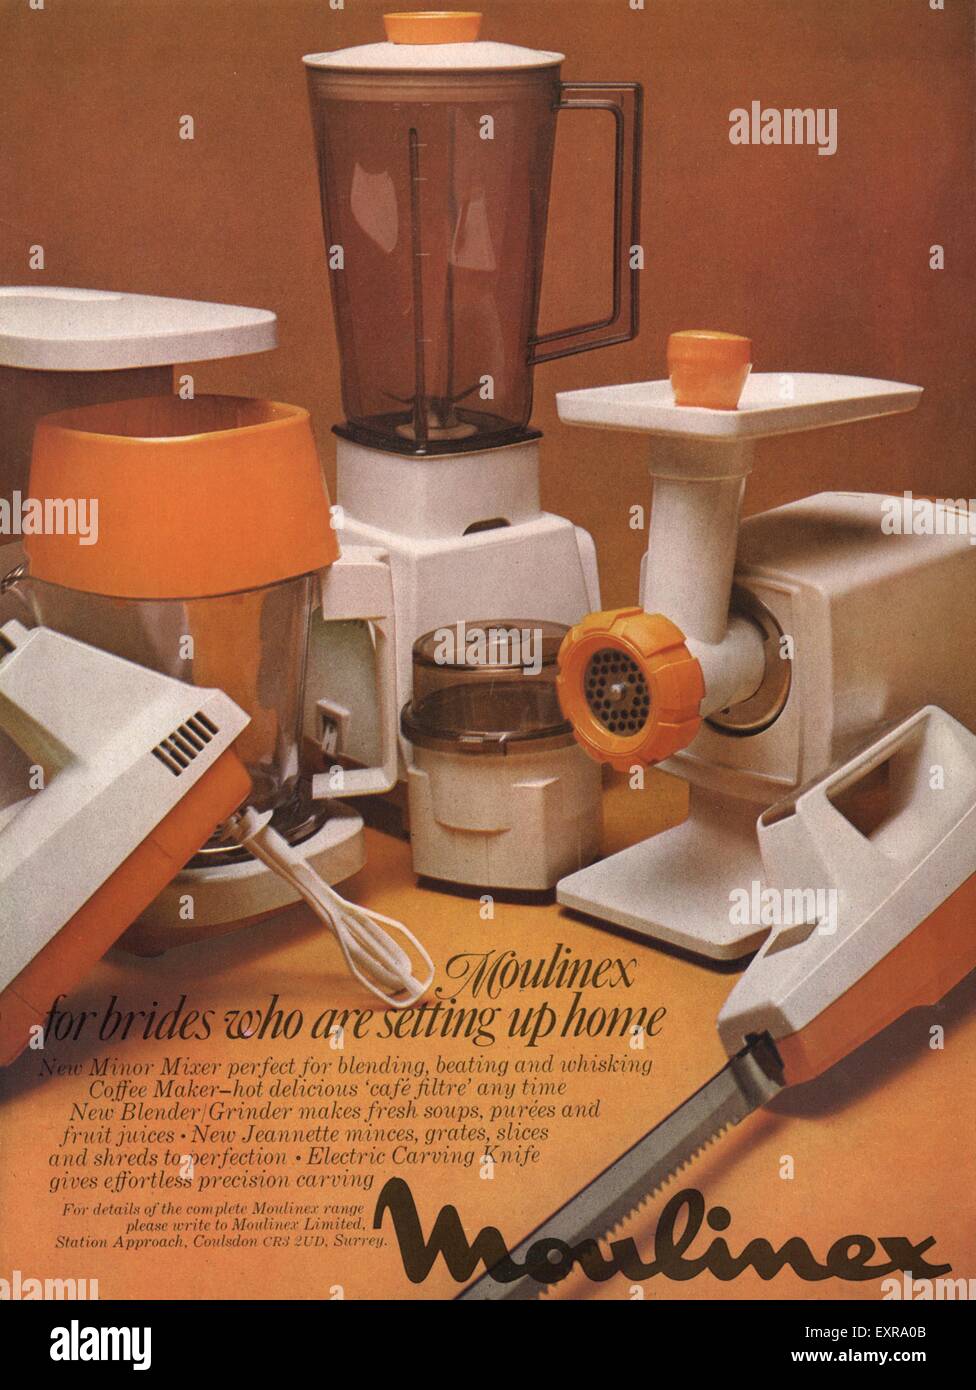 1970s uk moulinex magazine advert hi-res stock photography and images -  Alamy